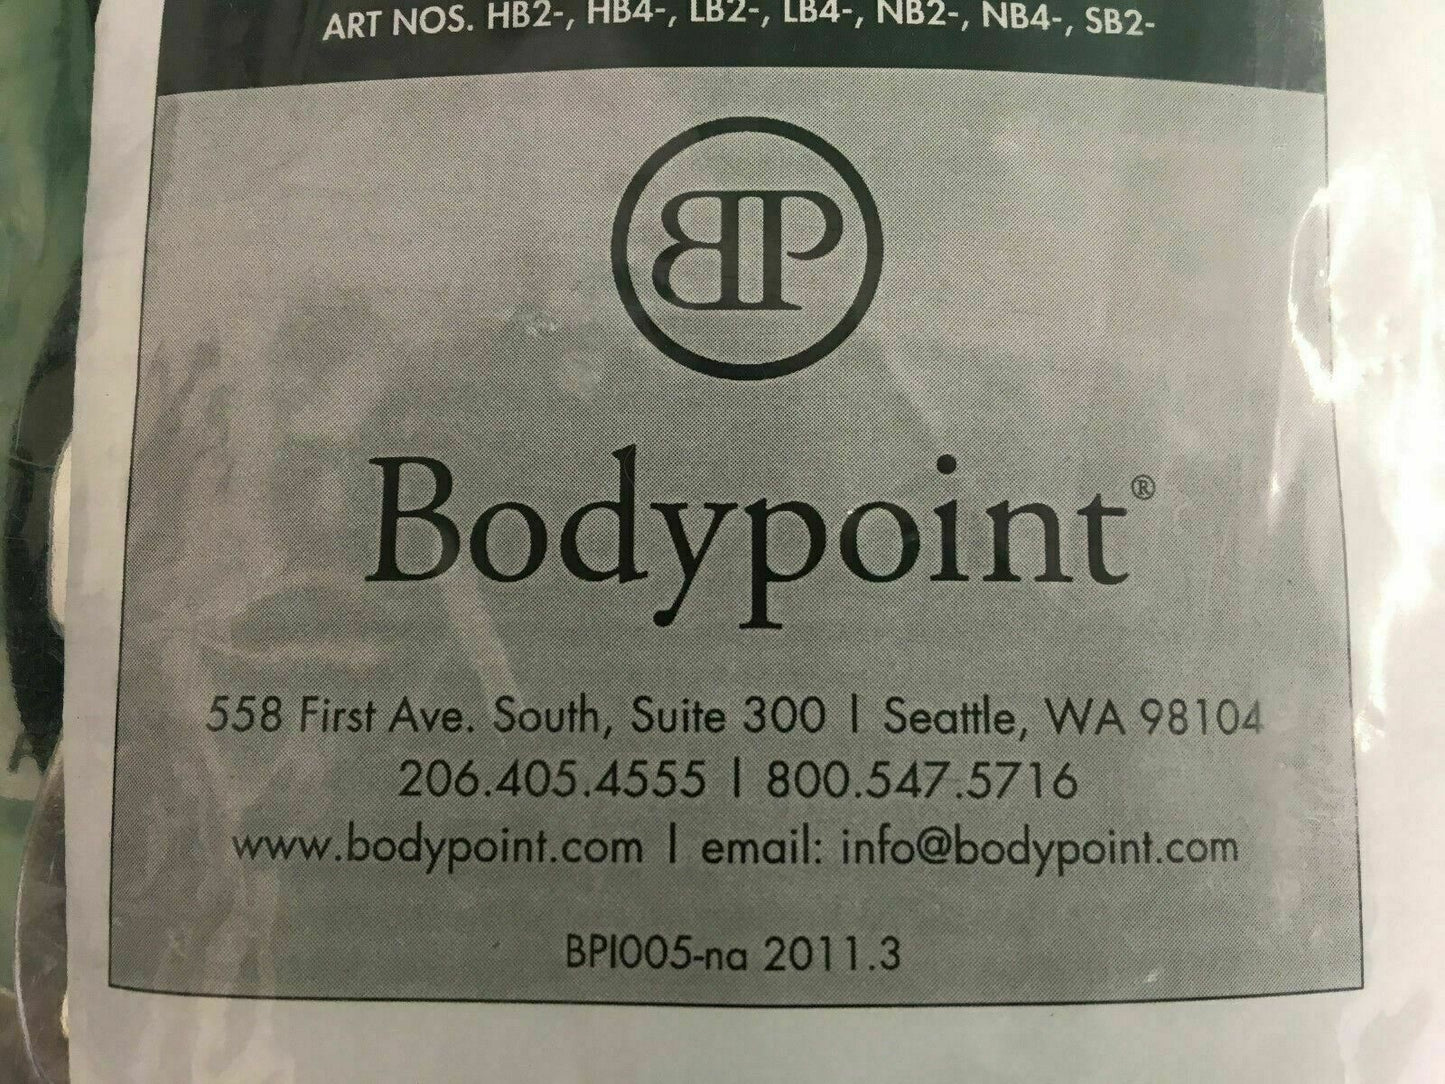 Bodypoint HIP BELT, REAR PULL, PB MEDIUM, FLAT MT for Wheelchair HB209M-B1 #B620